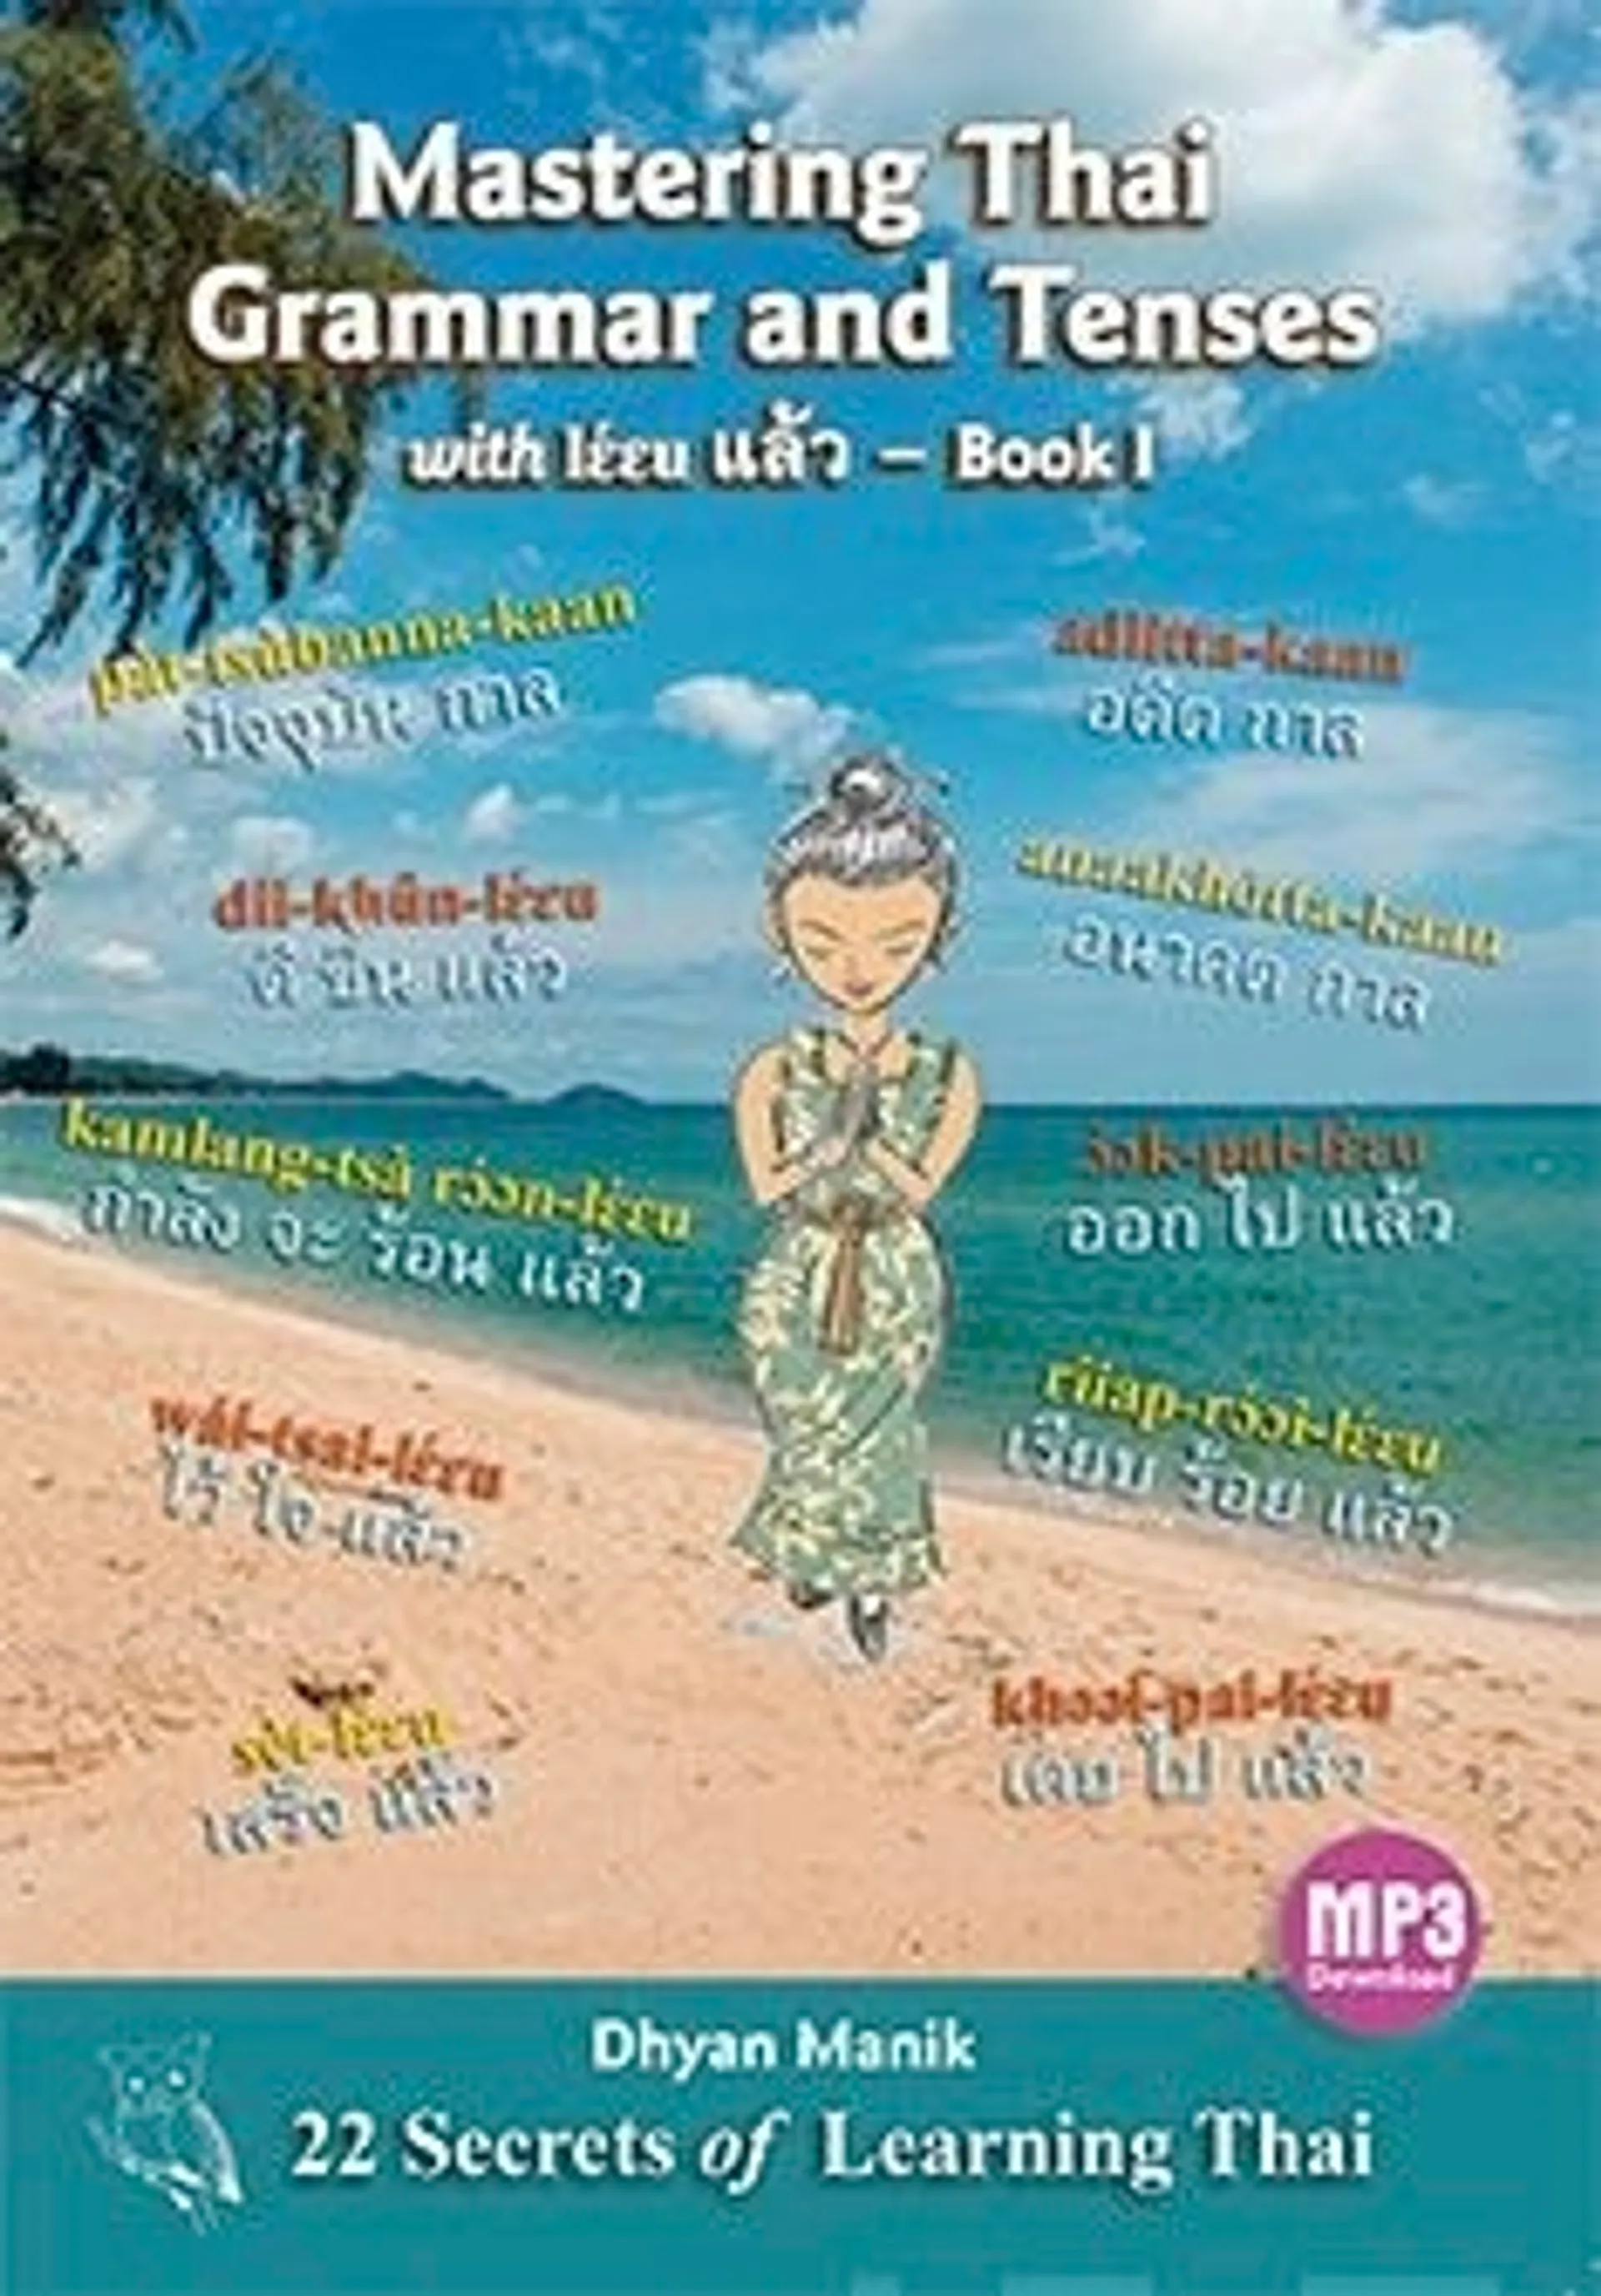 Manik, Masterin Thai Grammar and Tenses with Laeo - Book 1 (+MP3 Download)